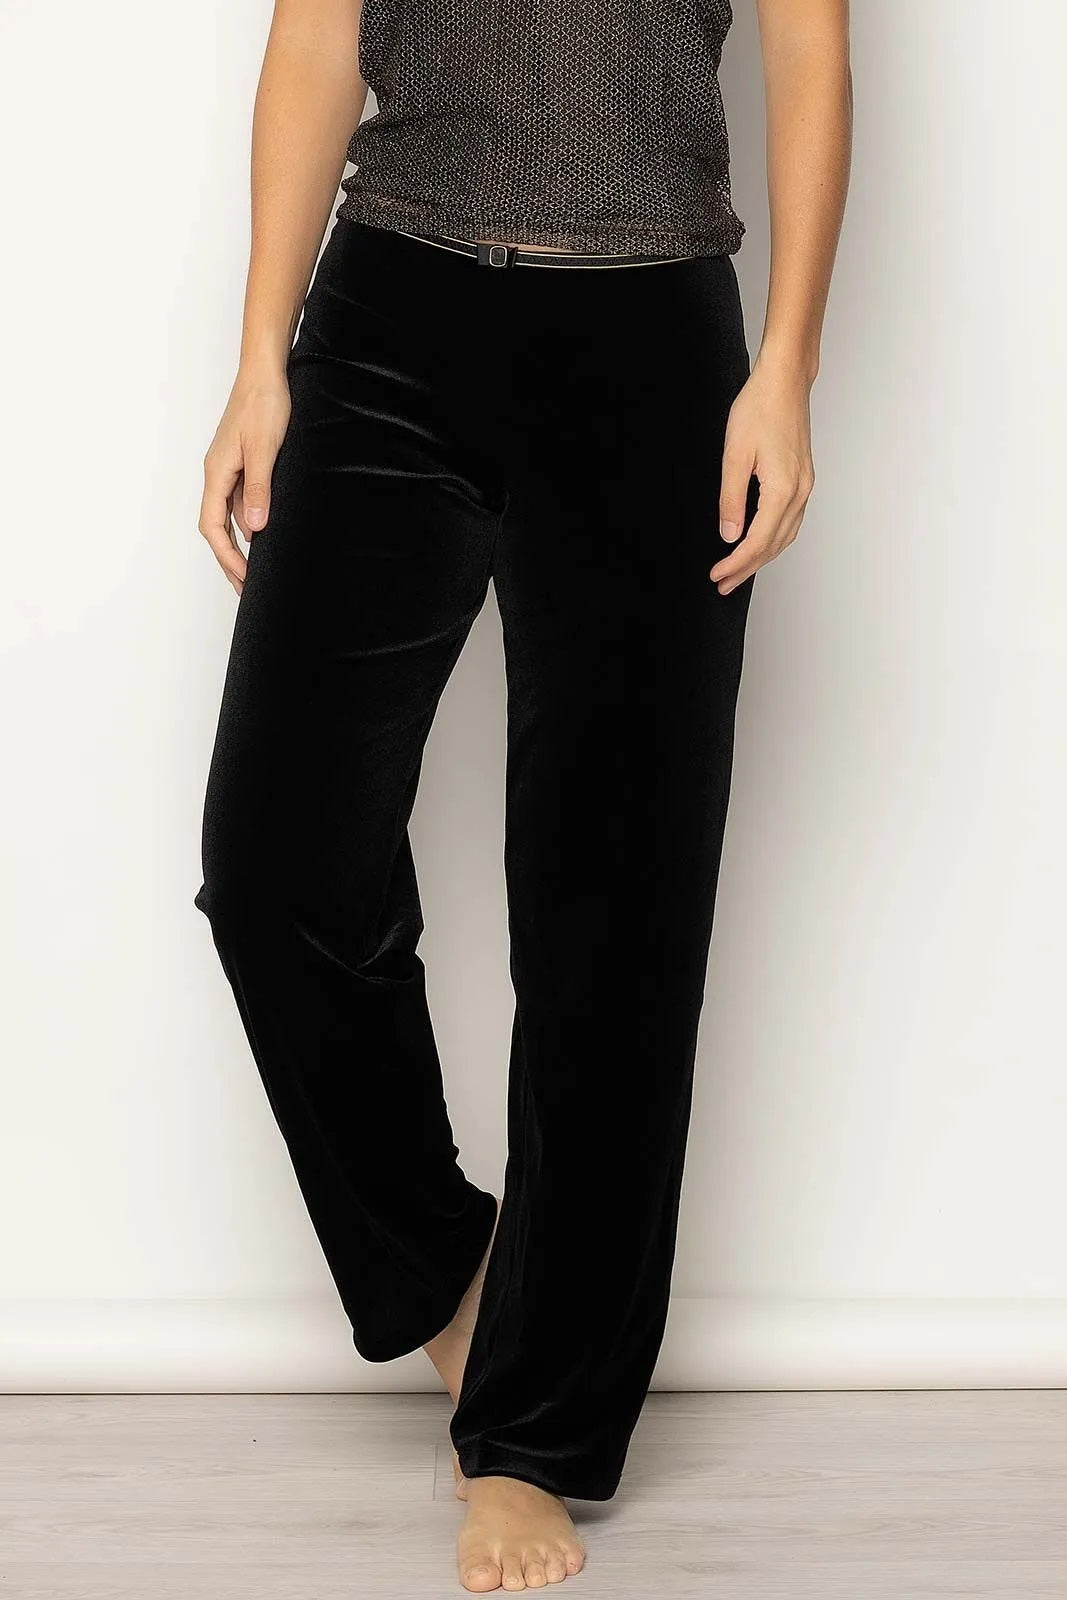 Empreinte Allure Pantalon BLACK buy for the best price CAD$ 156.00